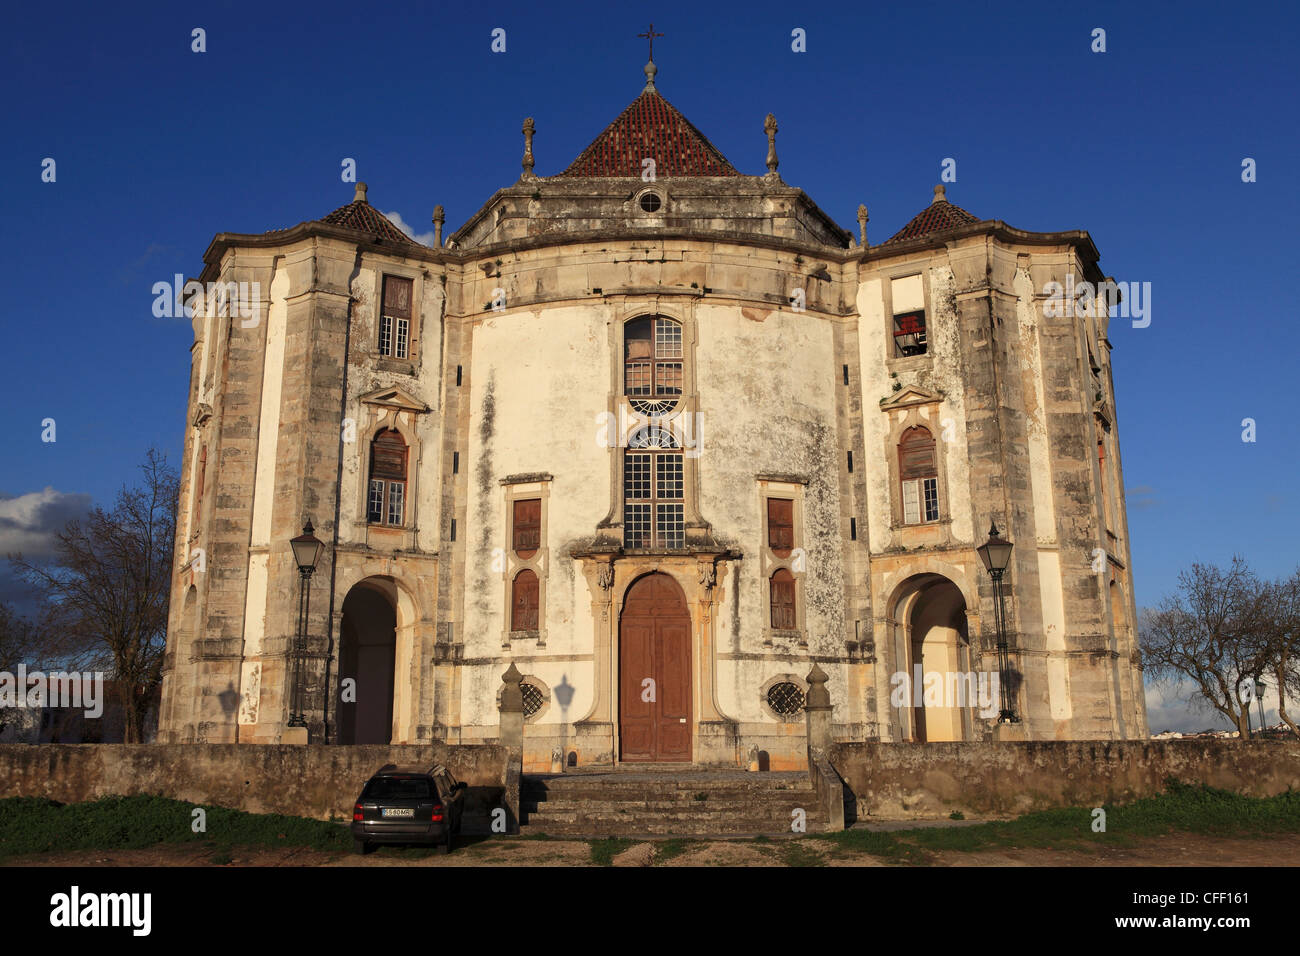 The baroque era Senhor Jesus da Pedra Sanctuary Church, dating from 1747, Obidos, Estremadura, Portugal, Europe Stock Photo